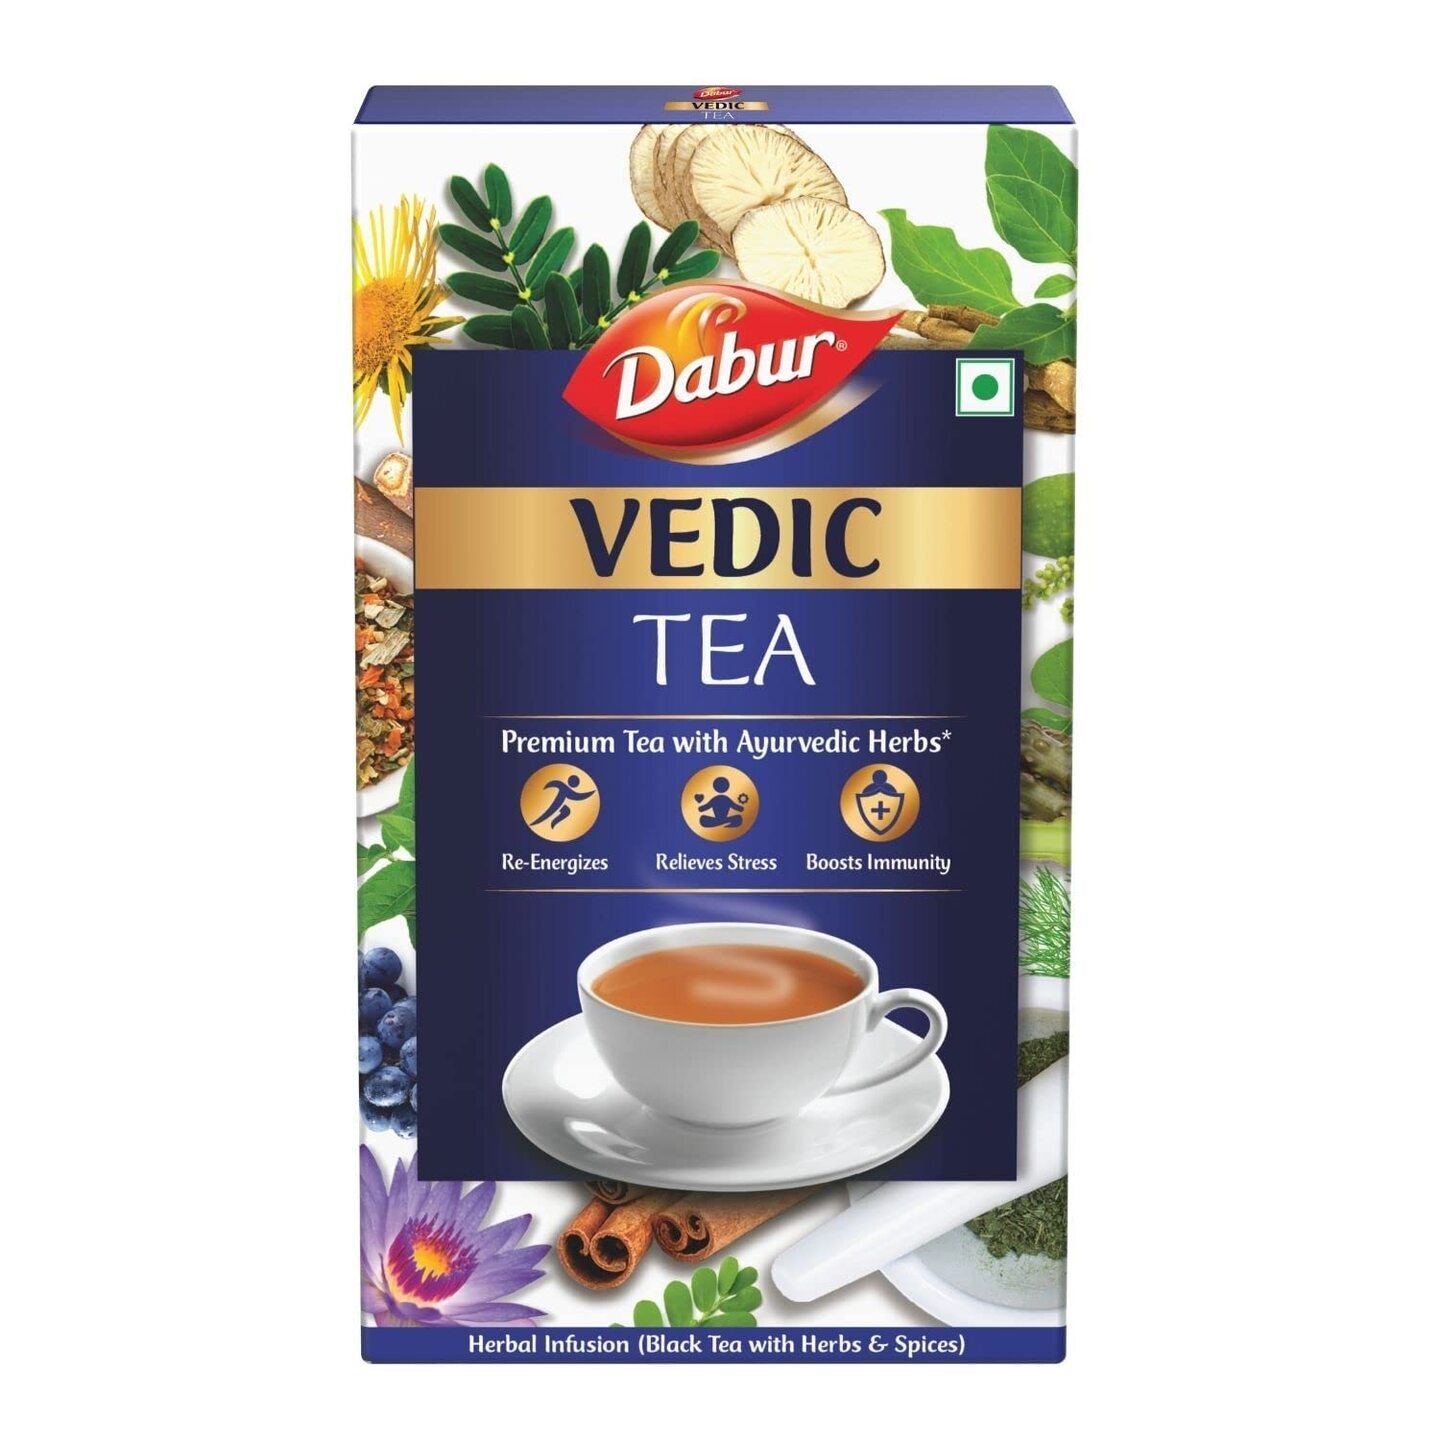 Dabur Vedic Tea - 500g (Black Tea) | Chai Handpicked from Assam, Nilgiri & Darjeeling | Soulful Aroma & Rich Taste | Premium Tea